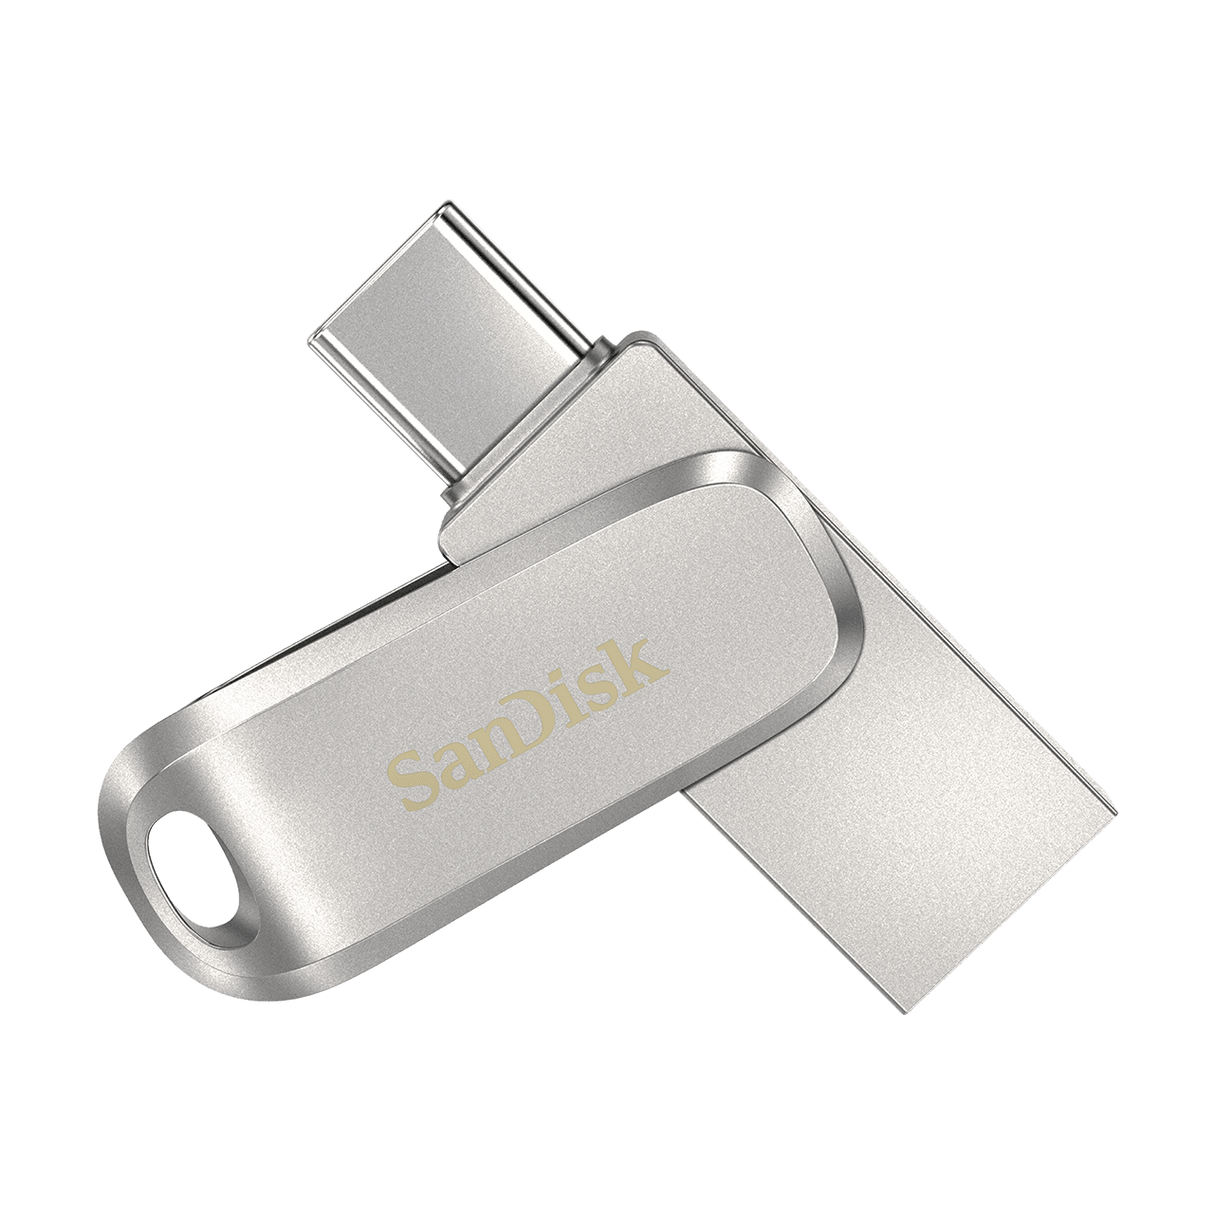 SanDisk Ultra Dual Drive Luxe USB Type-C 32GB 150MB/s USB 3.1 Gen 1, srebrn